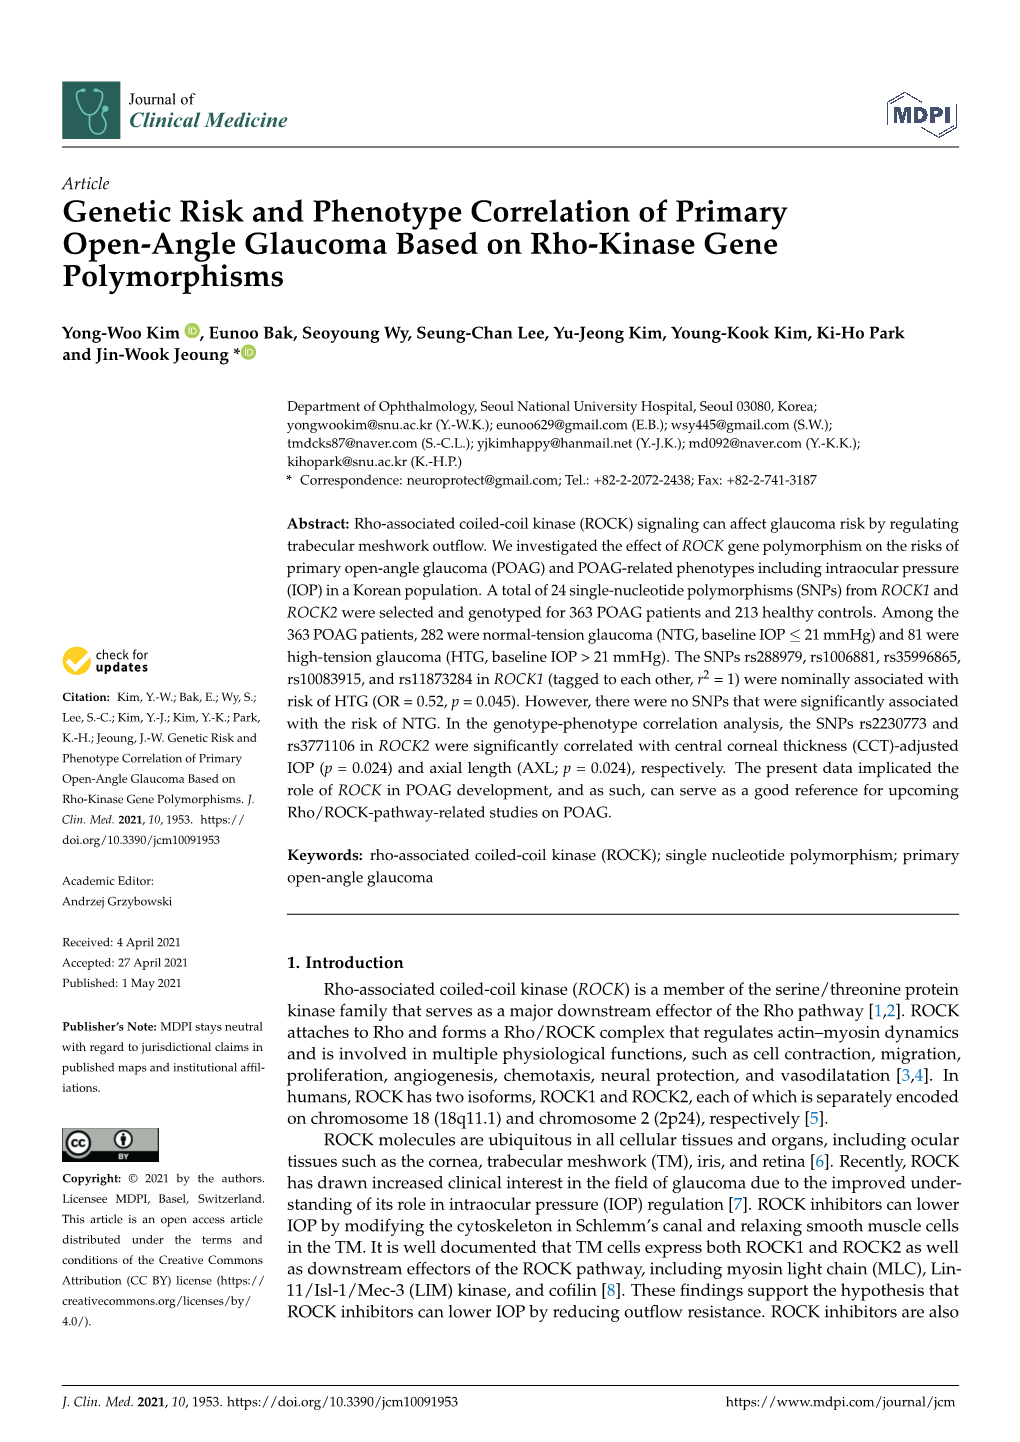 Genetic Risk and Phenotype Correlation of Primary Open-Angle Glaucoma Based on Rho-Kinase Gene Polymorphisms